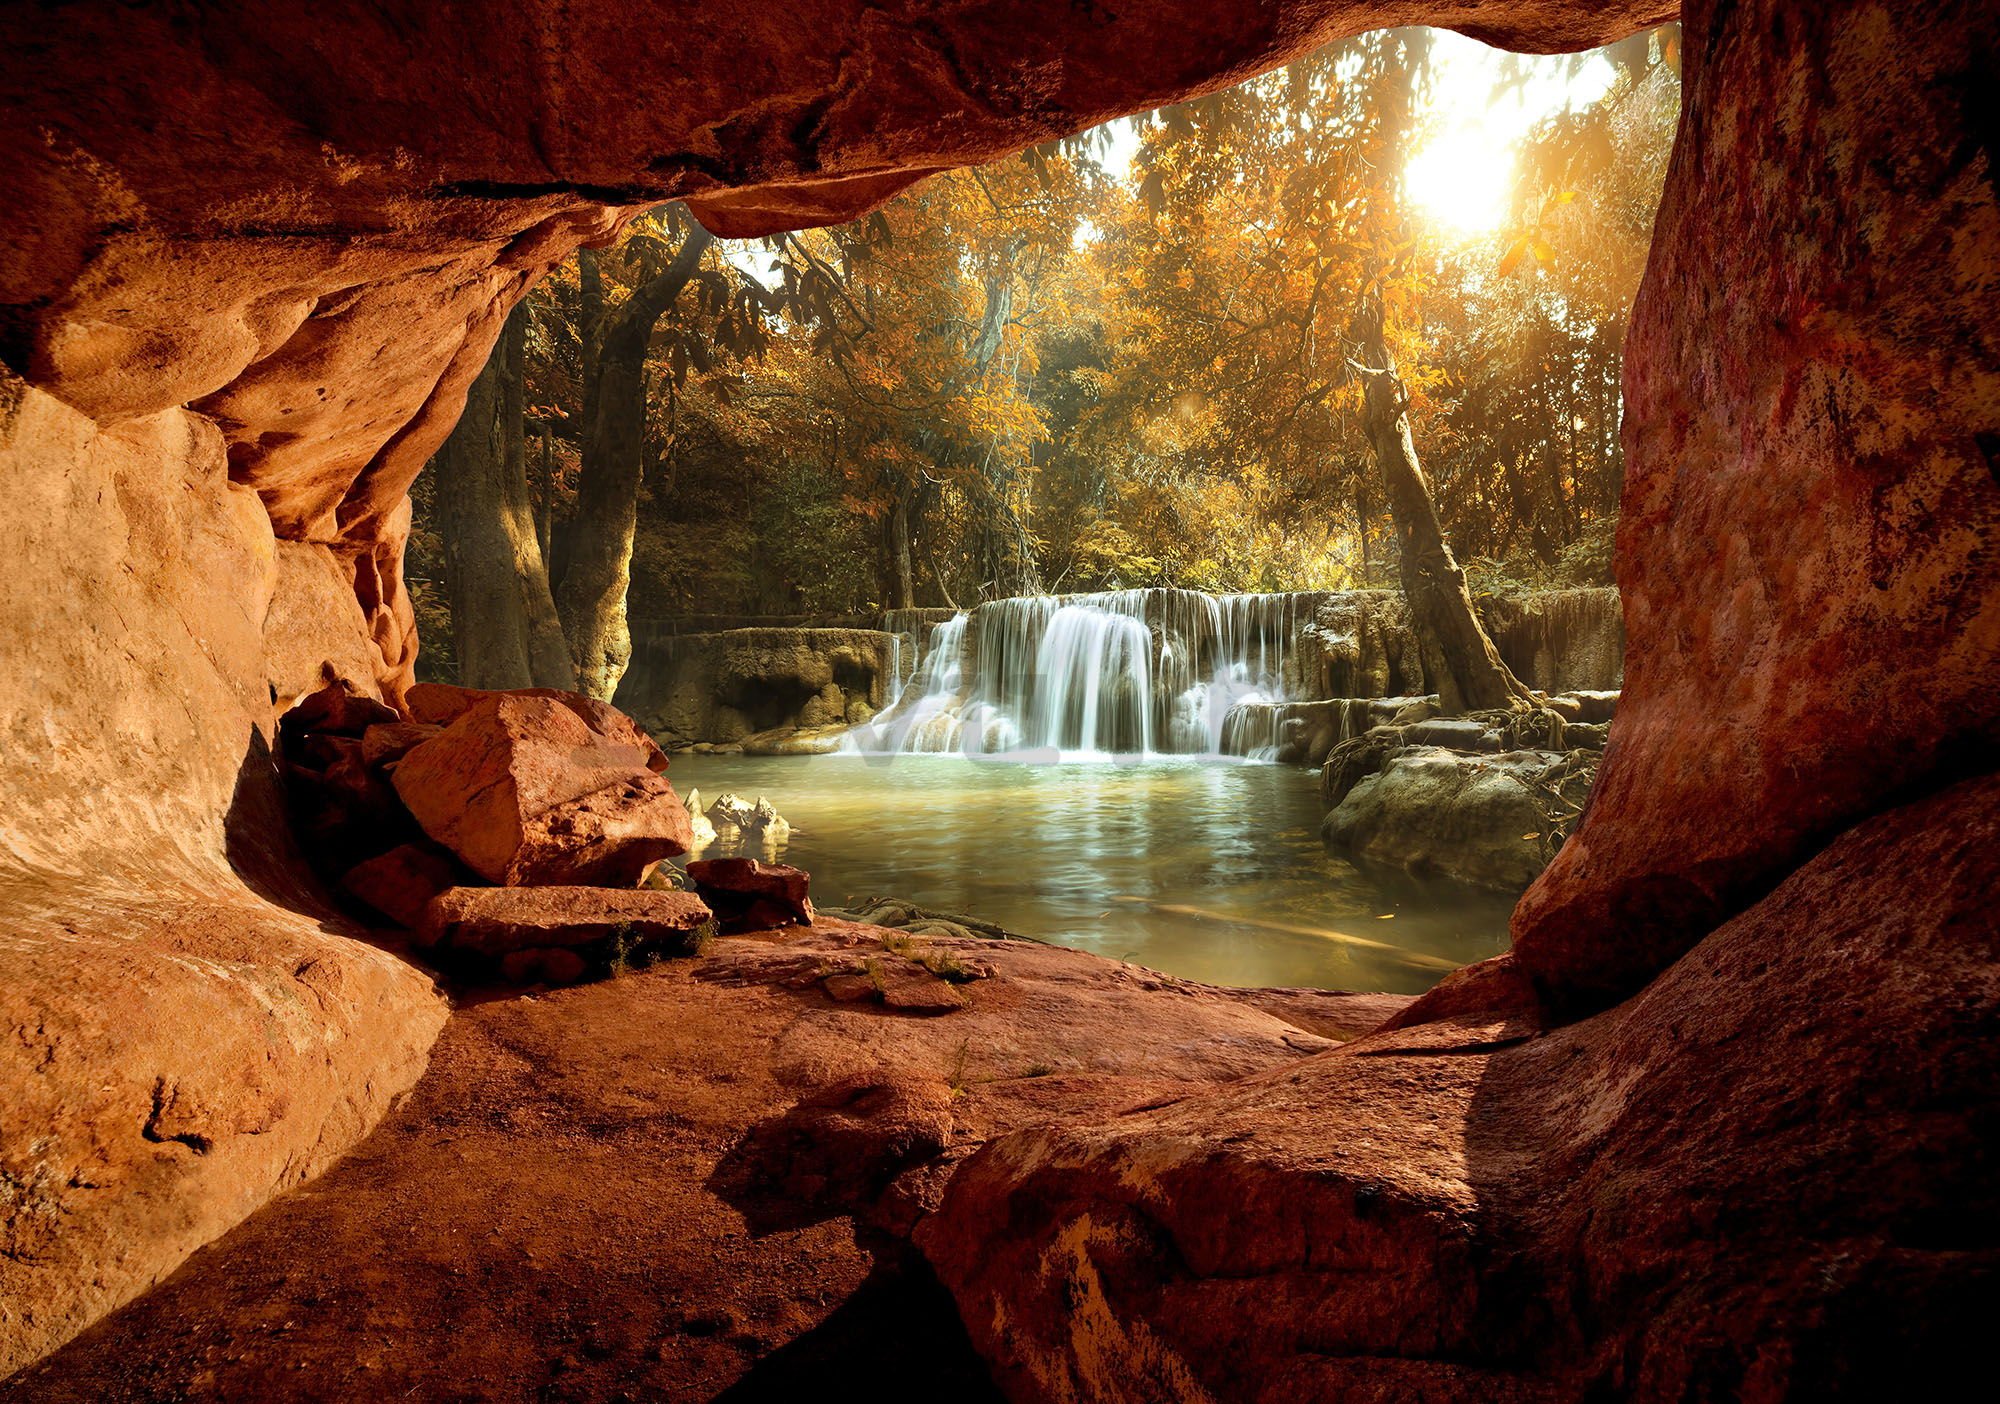 Vlies foto tapeta: Vodopadi u šumi (2) - 184x254 cm